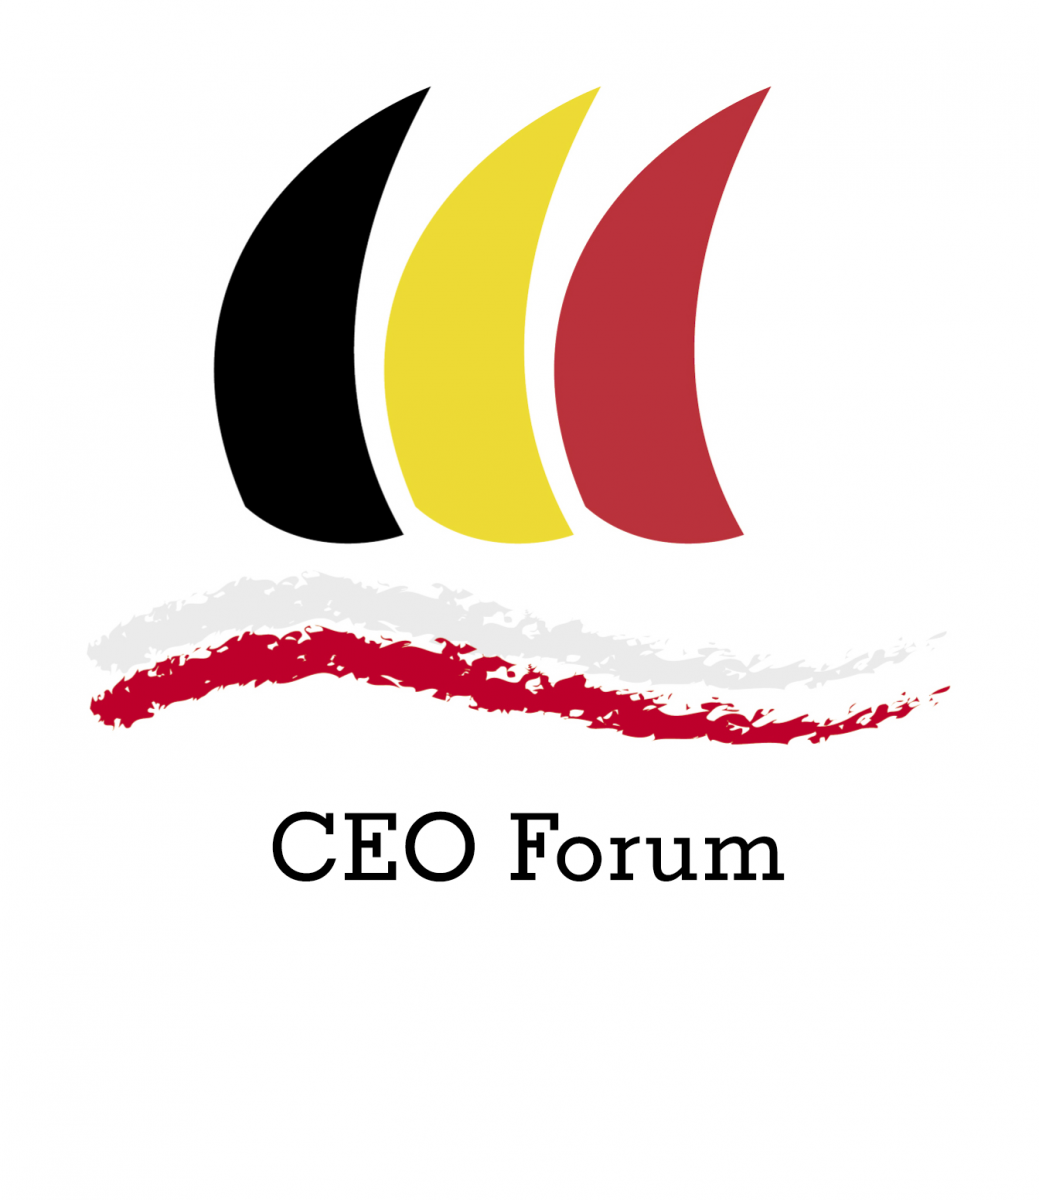 BELGIAN DAYS 2019: CEO Forum